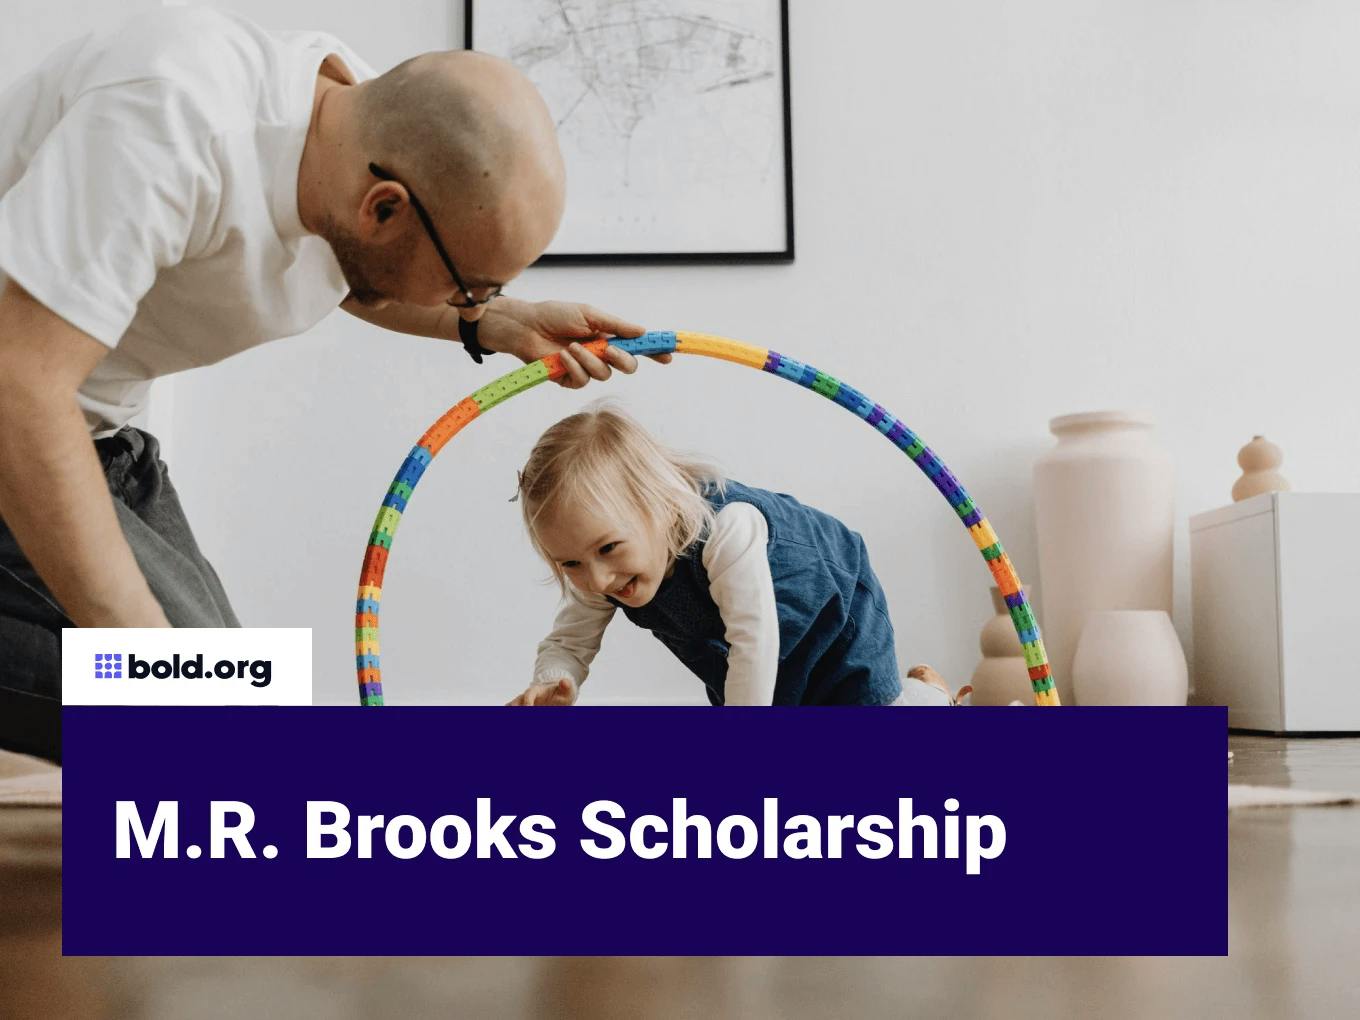 M.R. Brooks Scholarship